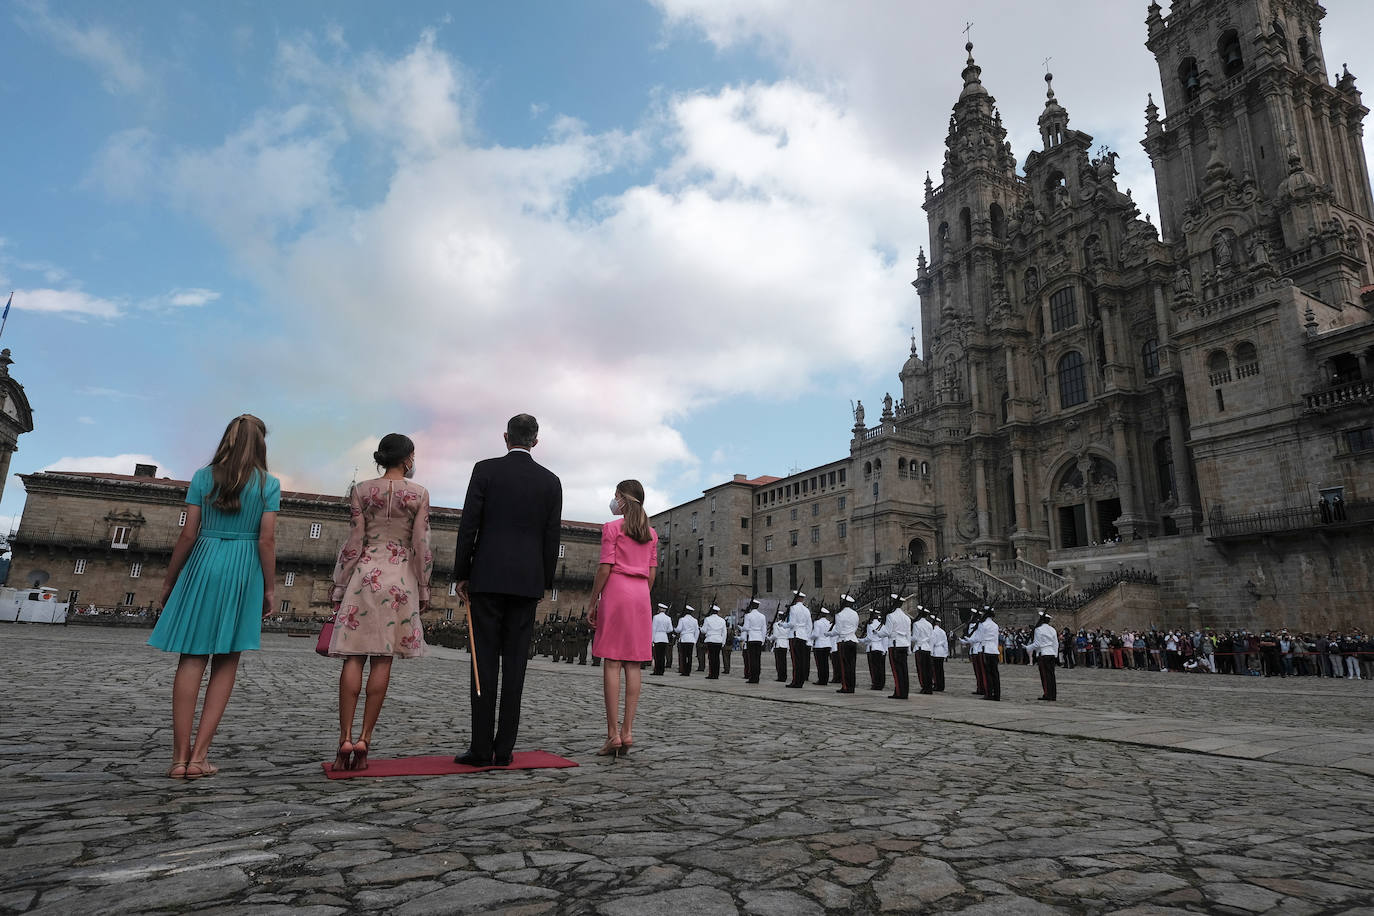 Fotos: La Familia Real preside la ofrenda al Apóstol Santiago